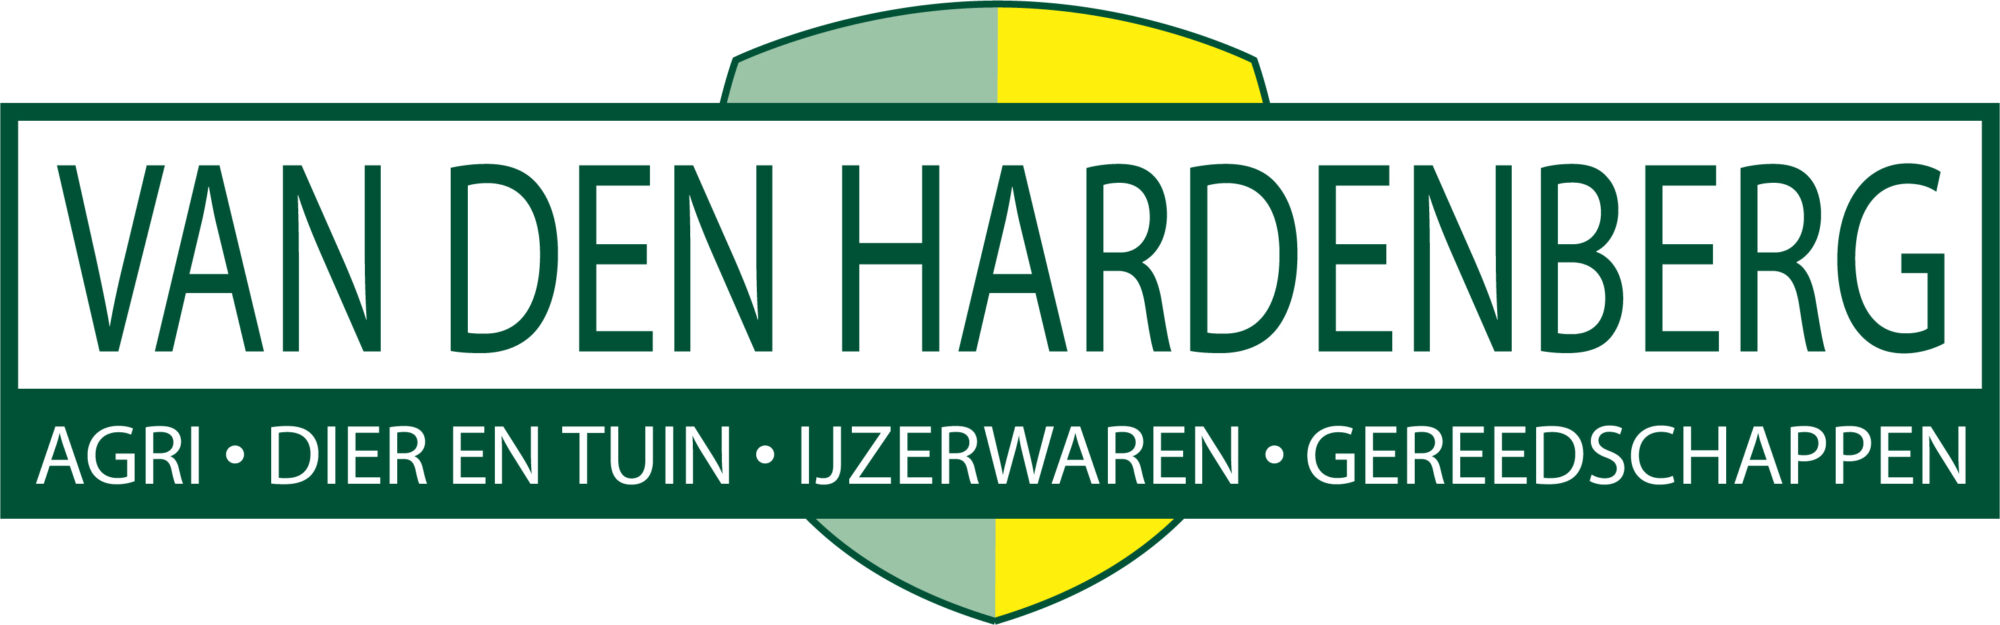 Hardenberg-Doornspijk V.O.F.